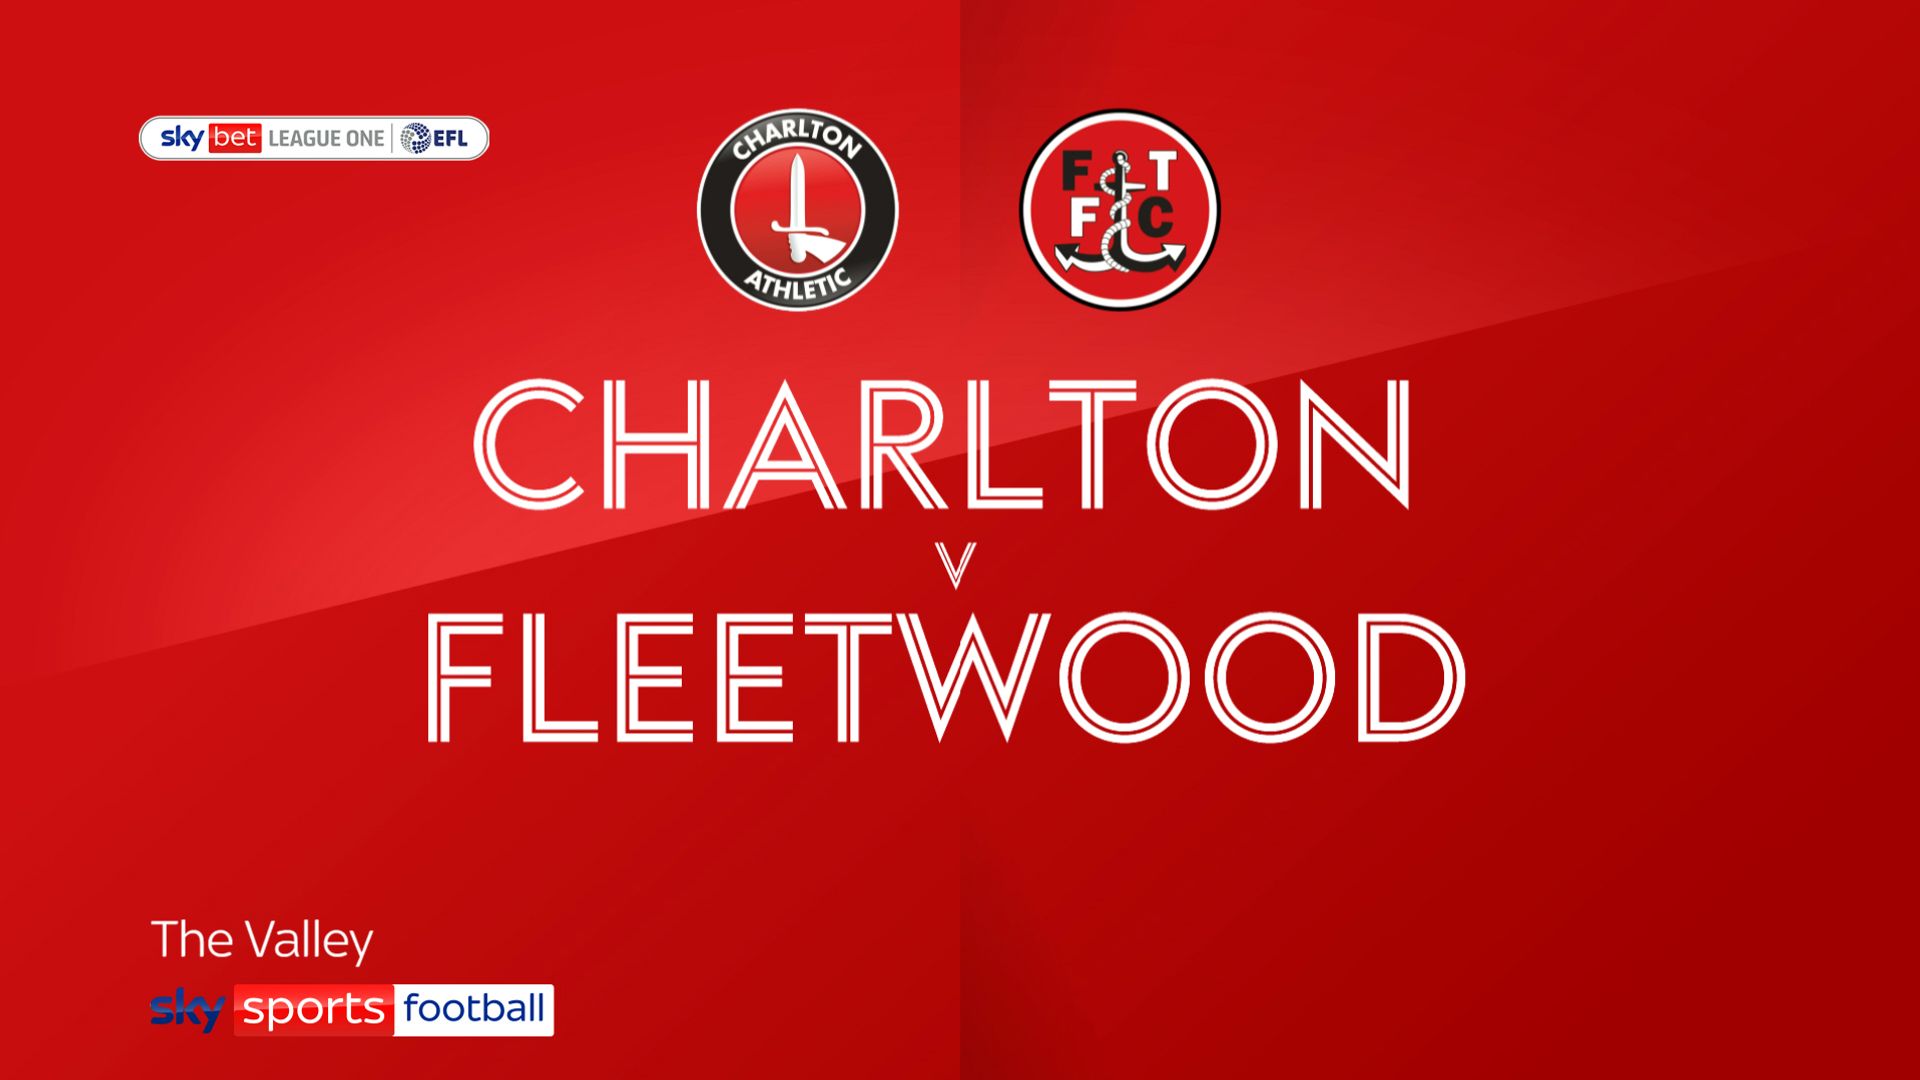 Charlton edge Fleetwood to secure overdue win